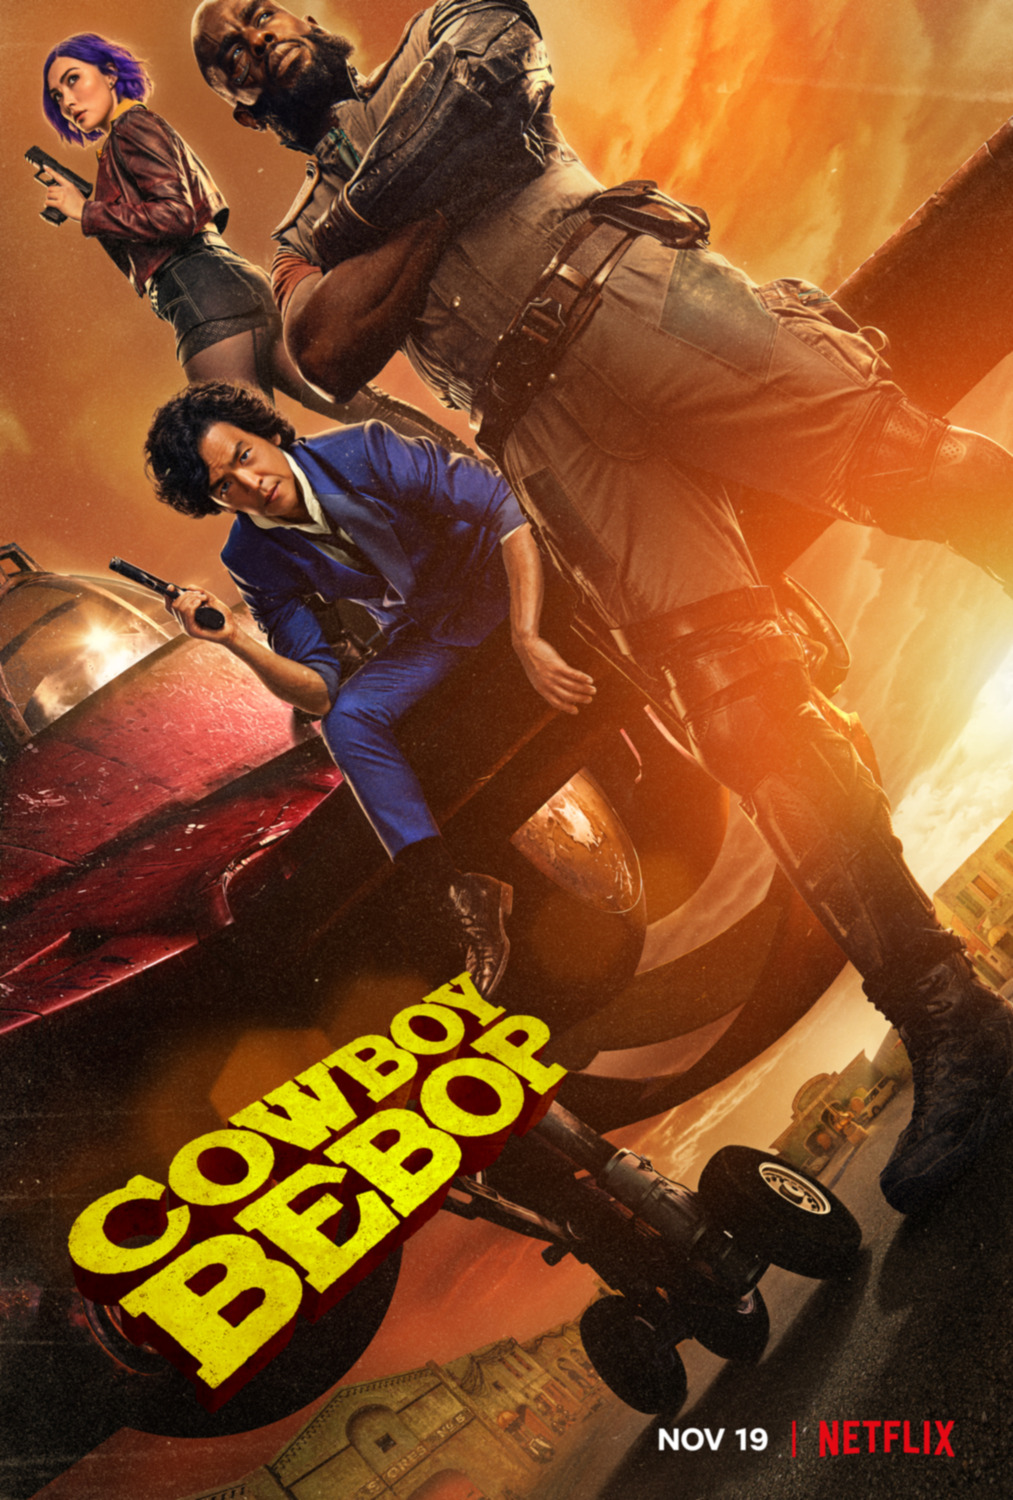 Extra Large TV Poster Image for Cowboy Bebop (#2 of 9)